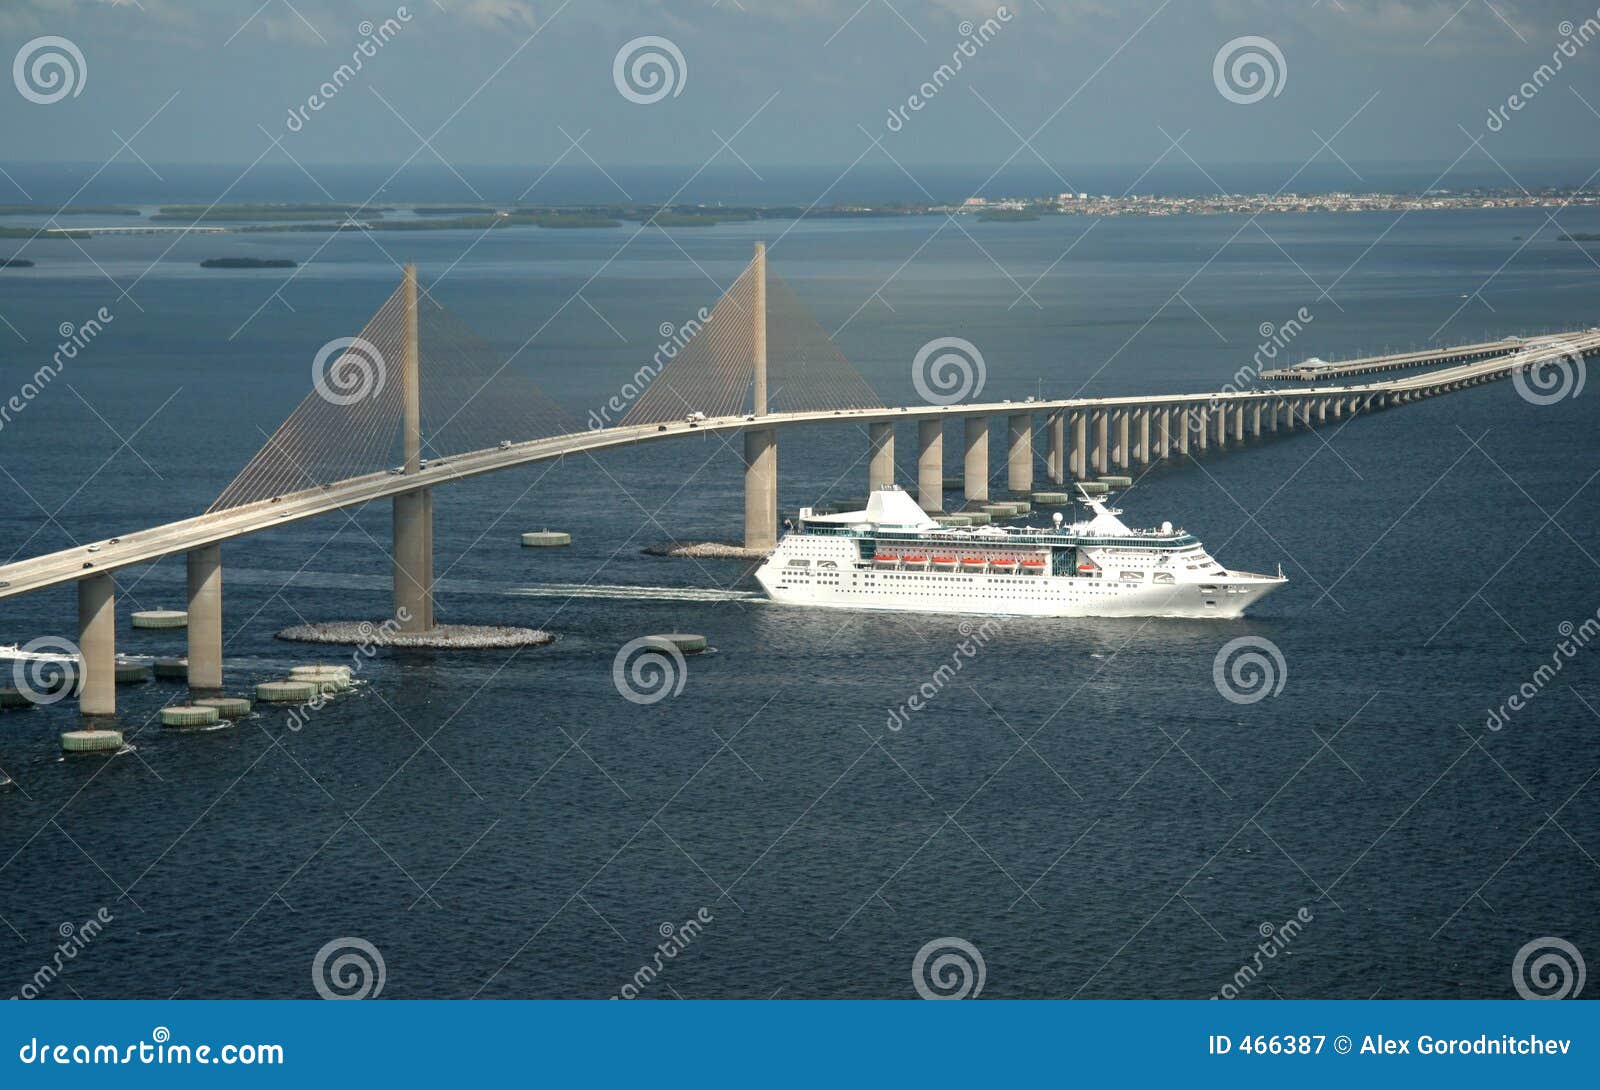 skyway bridge and cruise ship